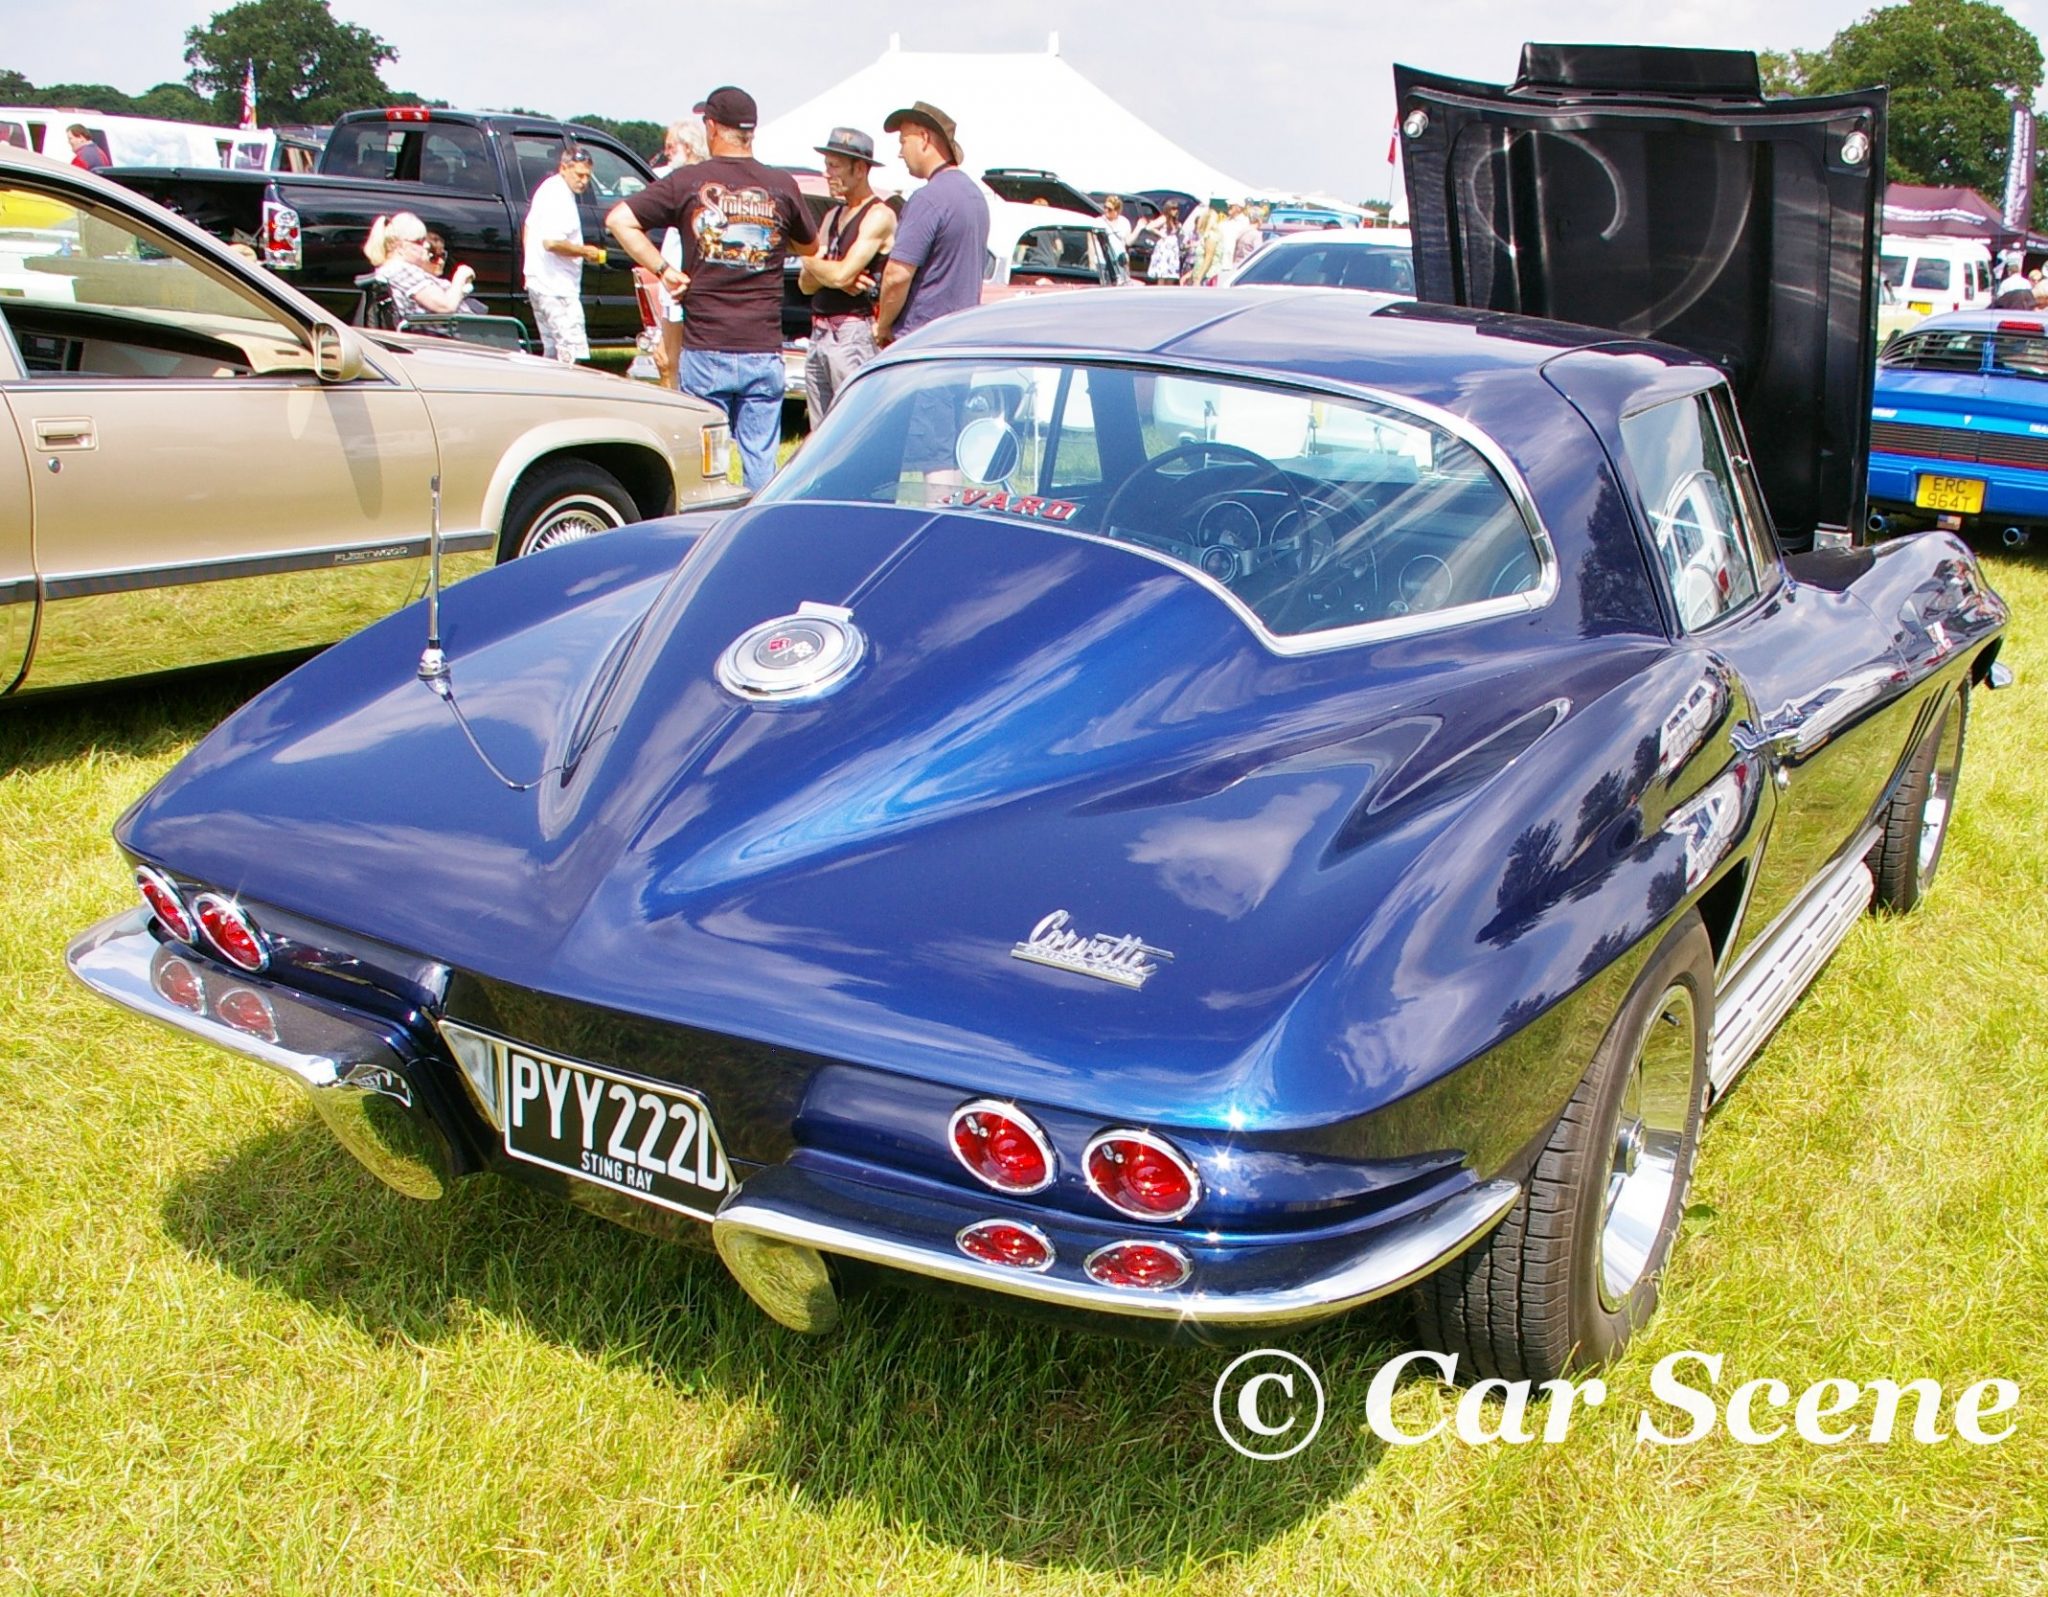 1963 Chevrolet Corvette Stingray rear view